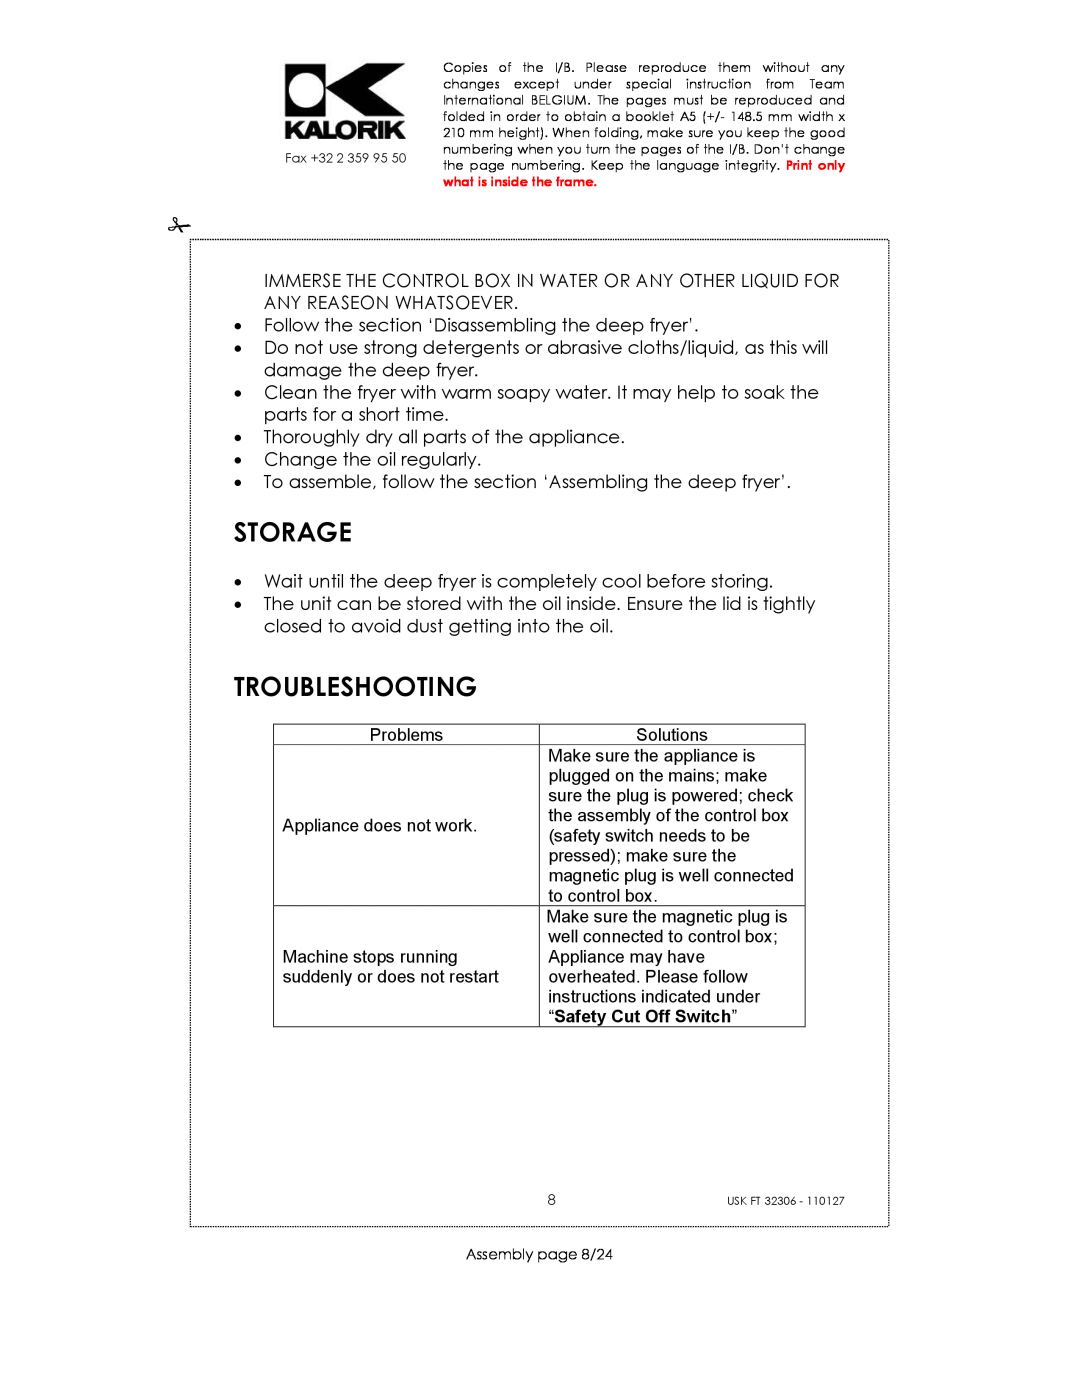 Kalorik USK FT 32306 manual Storage, Troubleshooting 